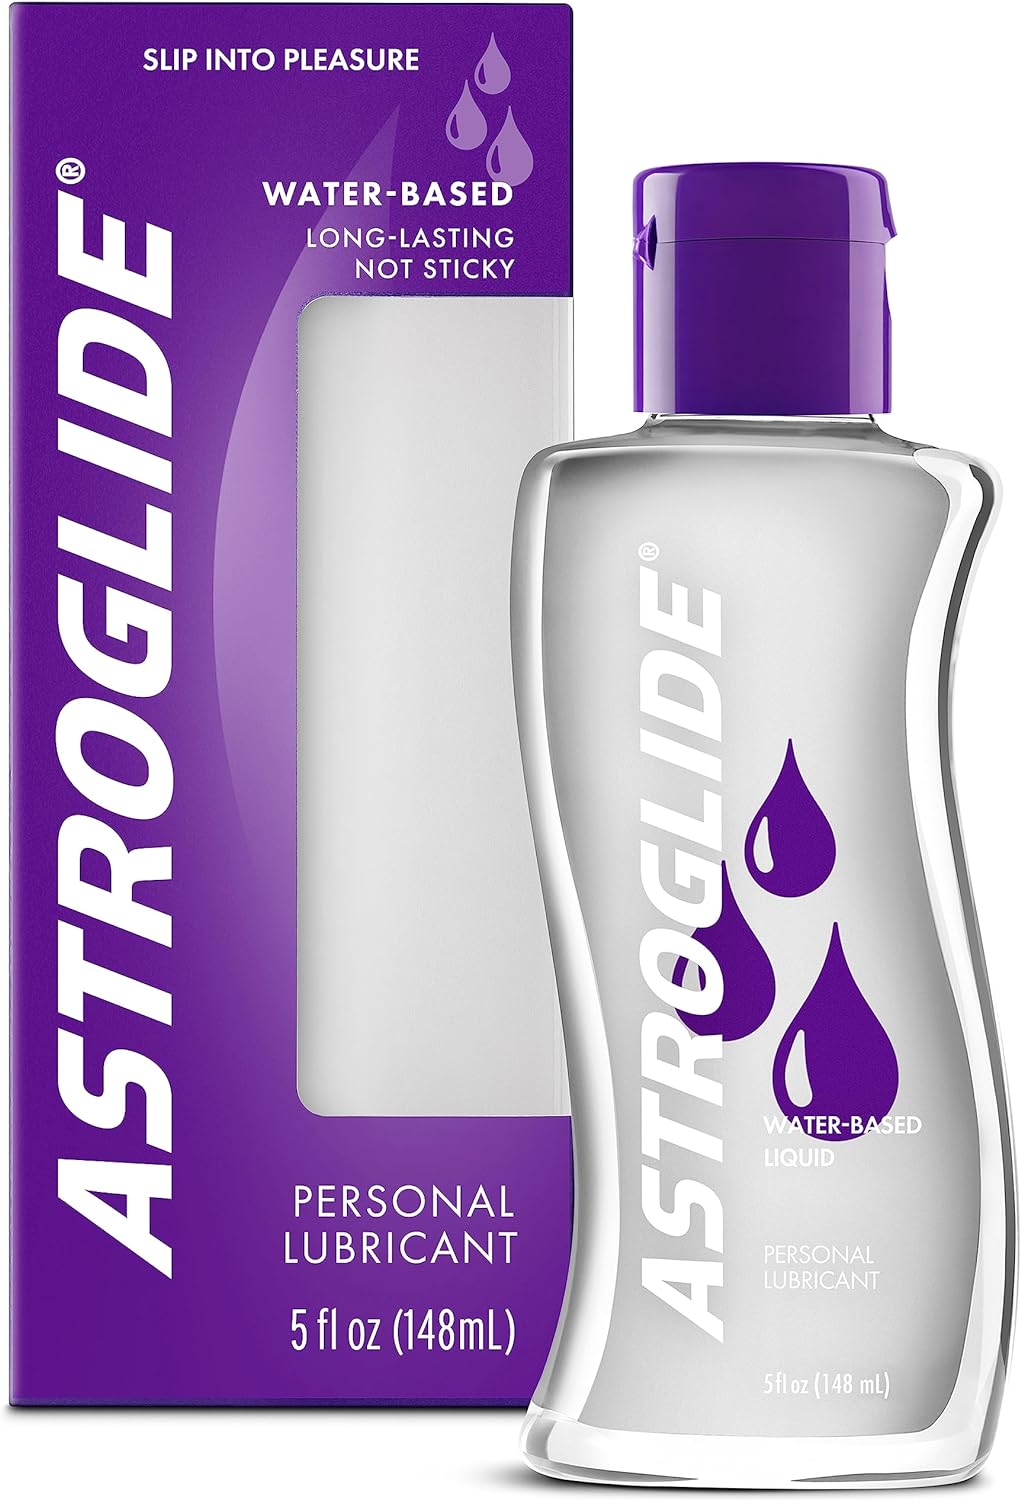 Astroglide Liquid, Water Based Personal Lubricant, 5 oz. 148ml